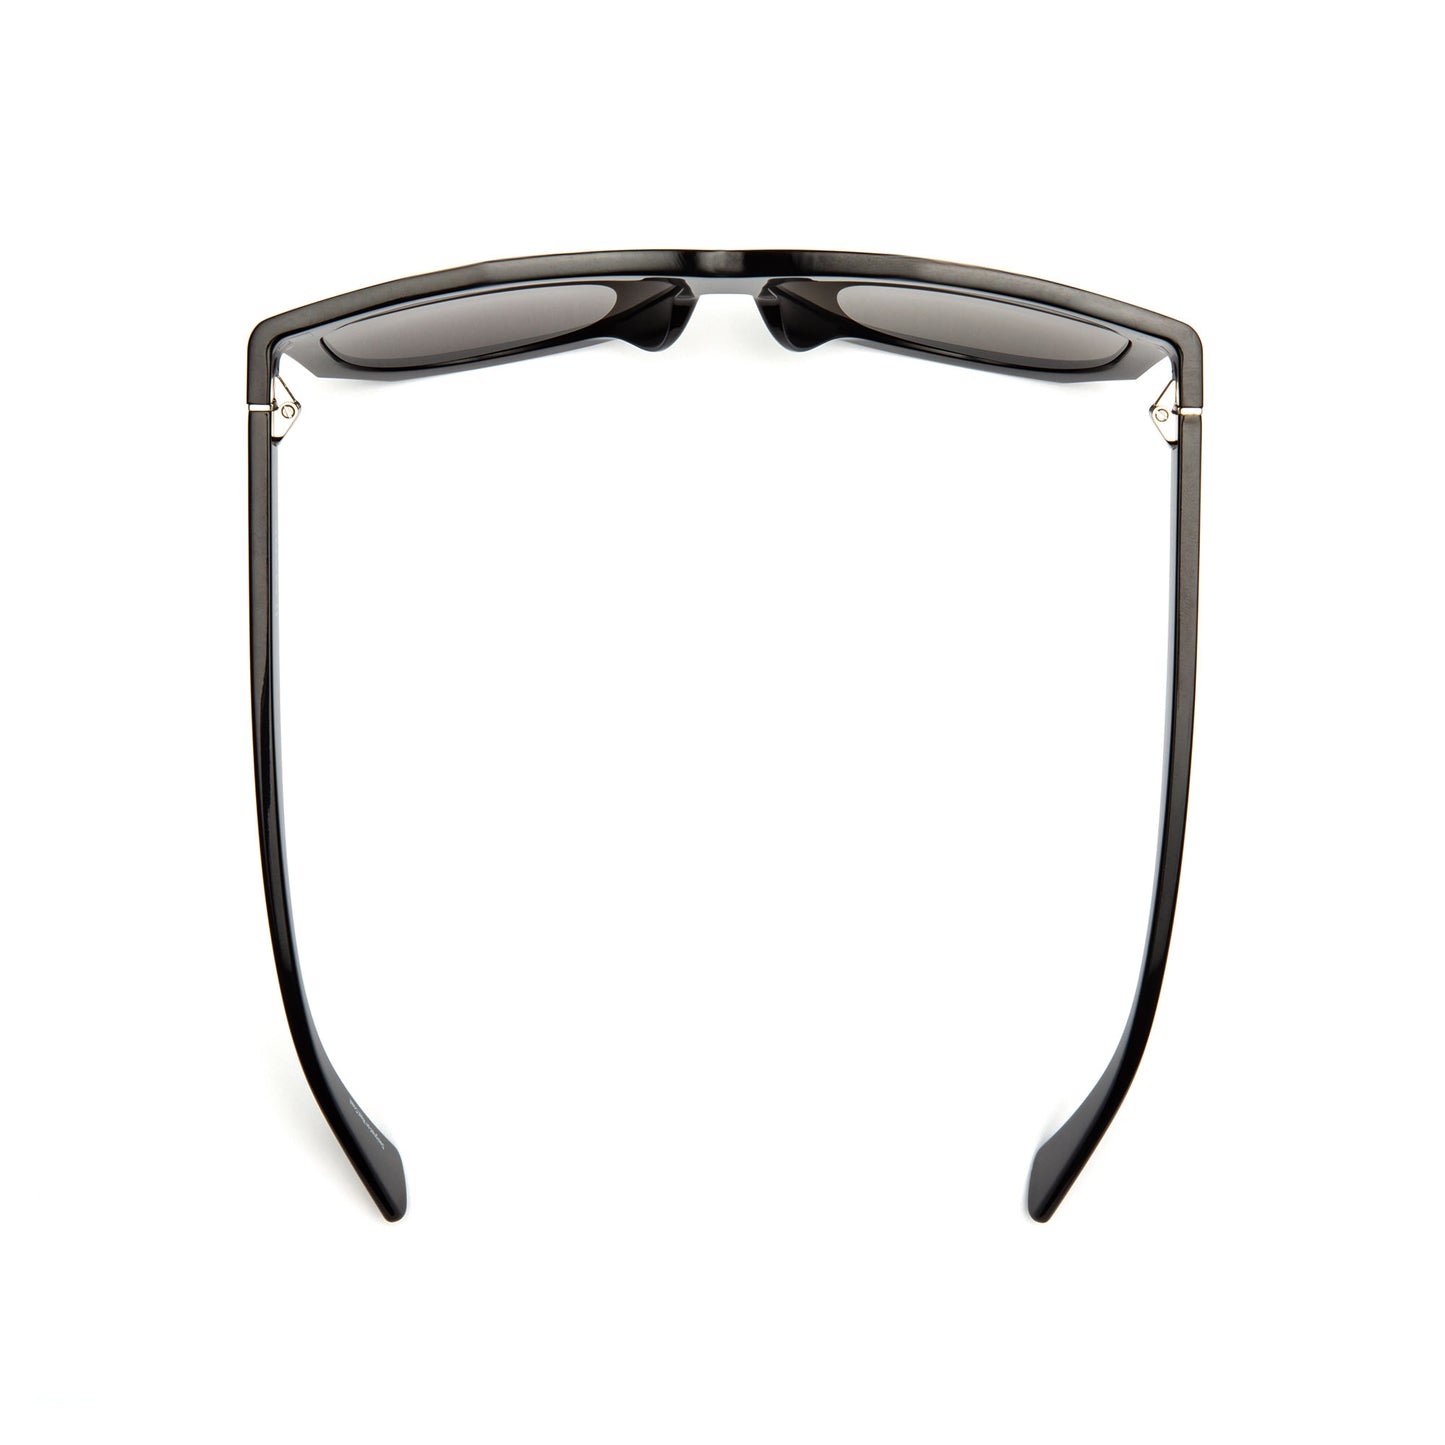 lL-Mare Polished Black Tide Sunglasses - Grey Lens